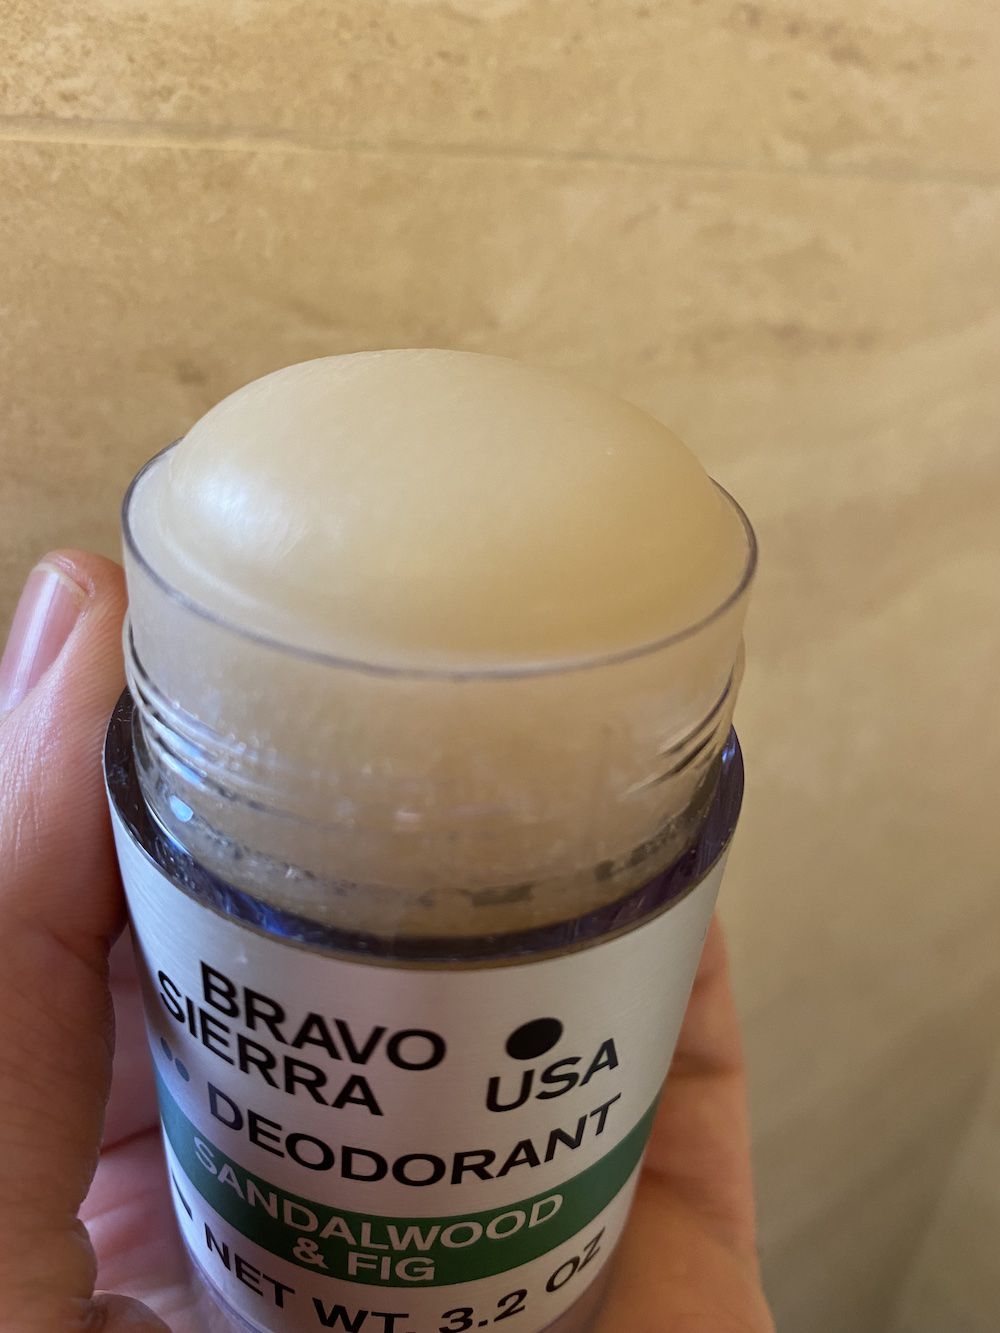 Bravo Sierra desodorante